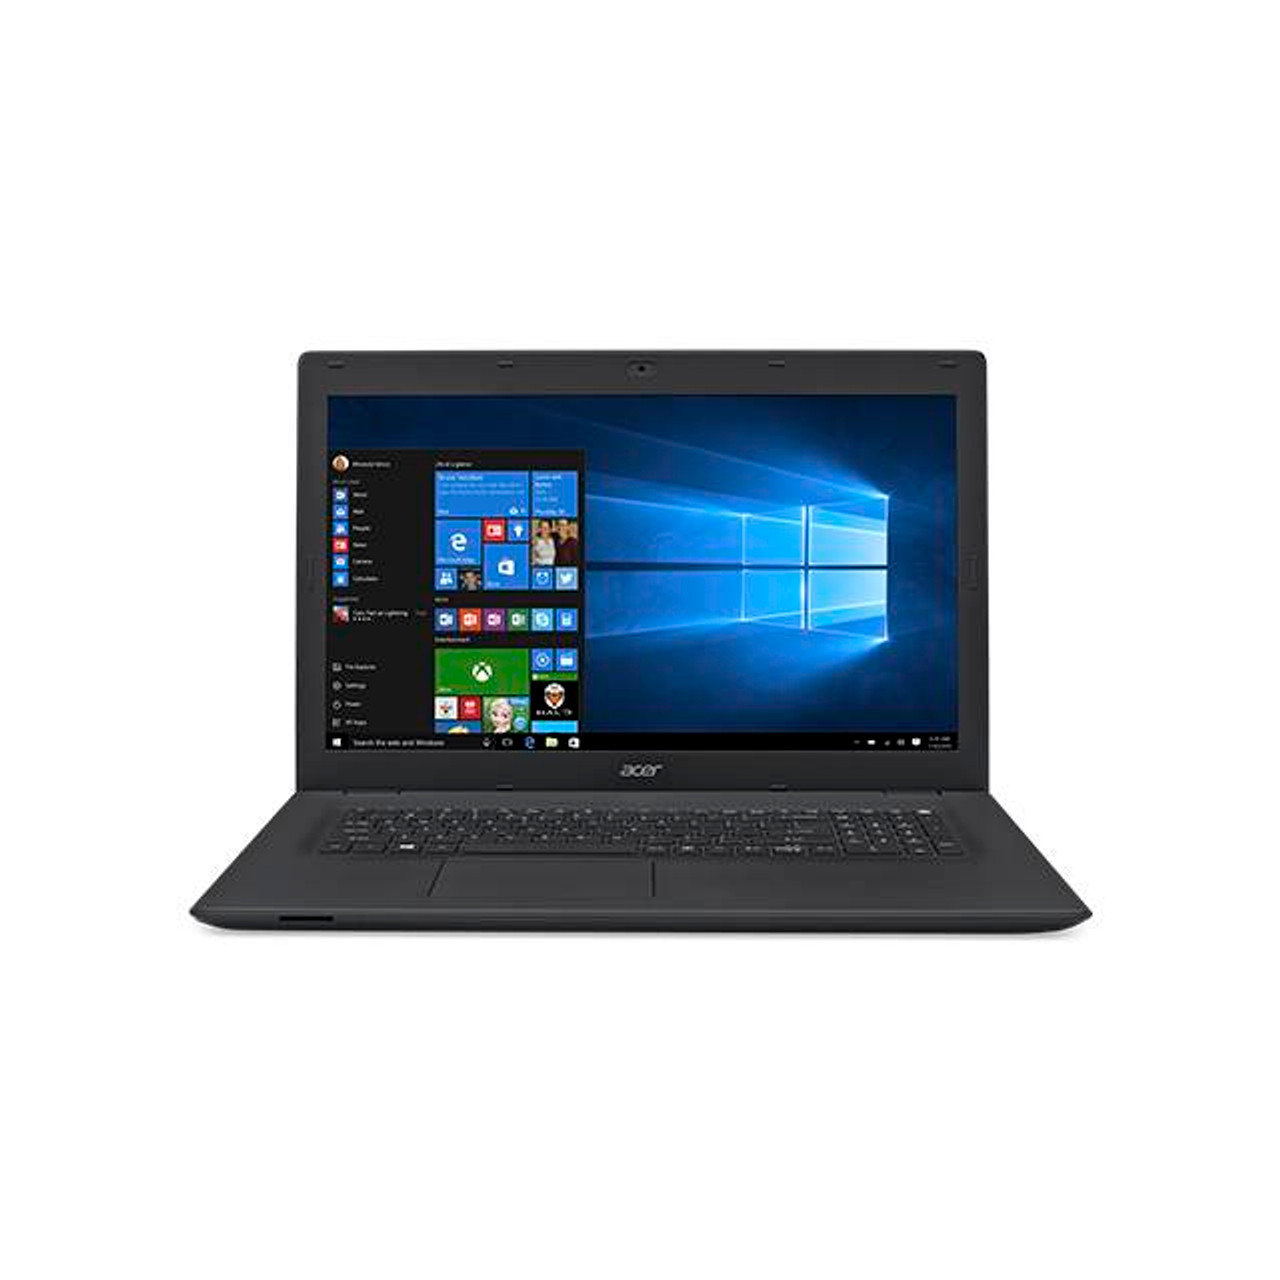 Acer TravelMate P2 TMP278-MG-788Z 17.3 inch Intel Core i7-6500U 2.5GHz/ 8GB DDR3L/ 1TB HDD/ 940M/ DVD±RW/ USB3.0/ Windows 7 Professional or Windows 10 Pro Notebook (Black)